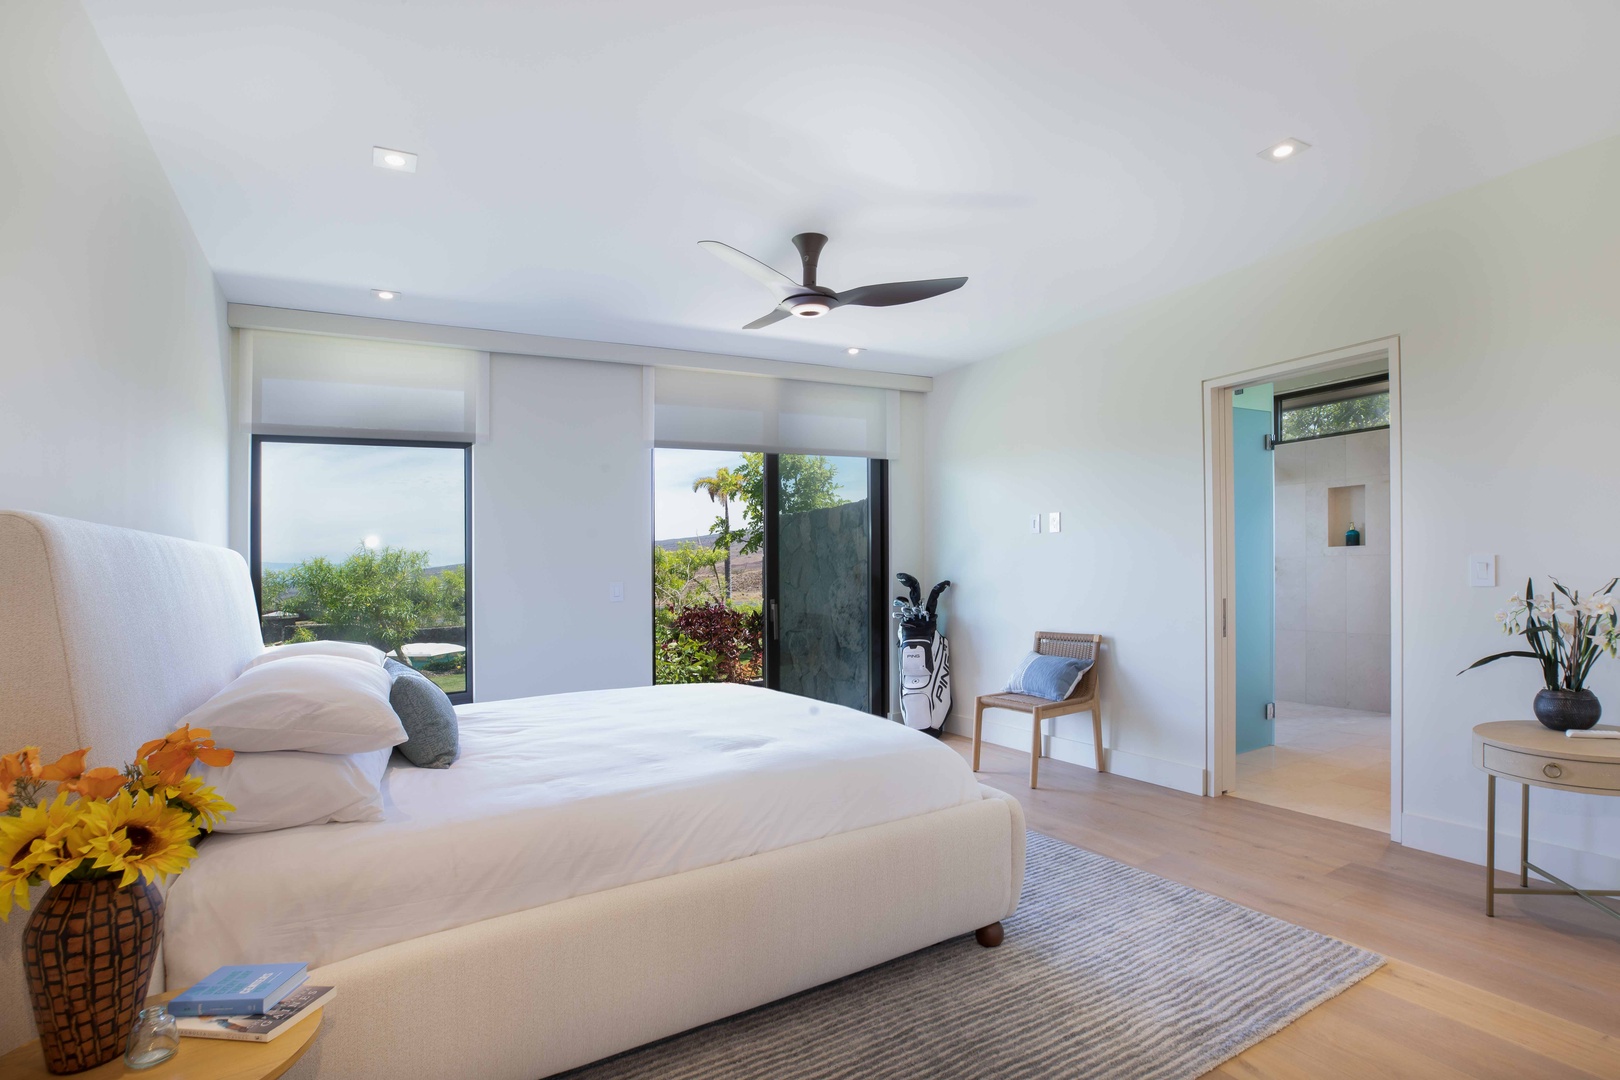 Kamuela Vacation Rentals, Hapuna Estates #8 - Suite 3 also offers an outdoor shower